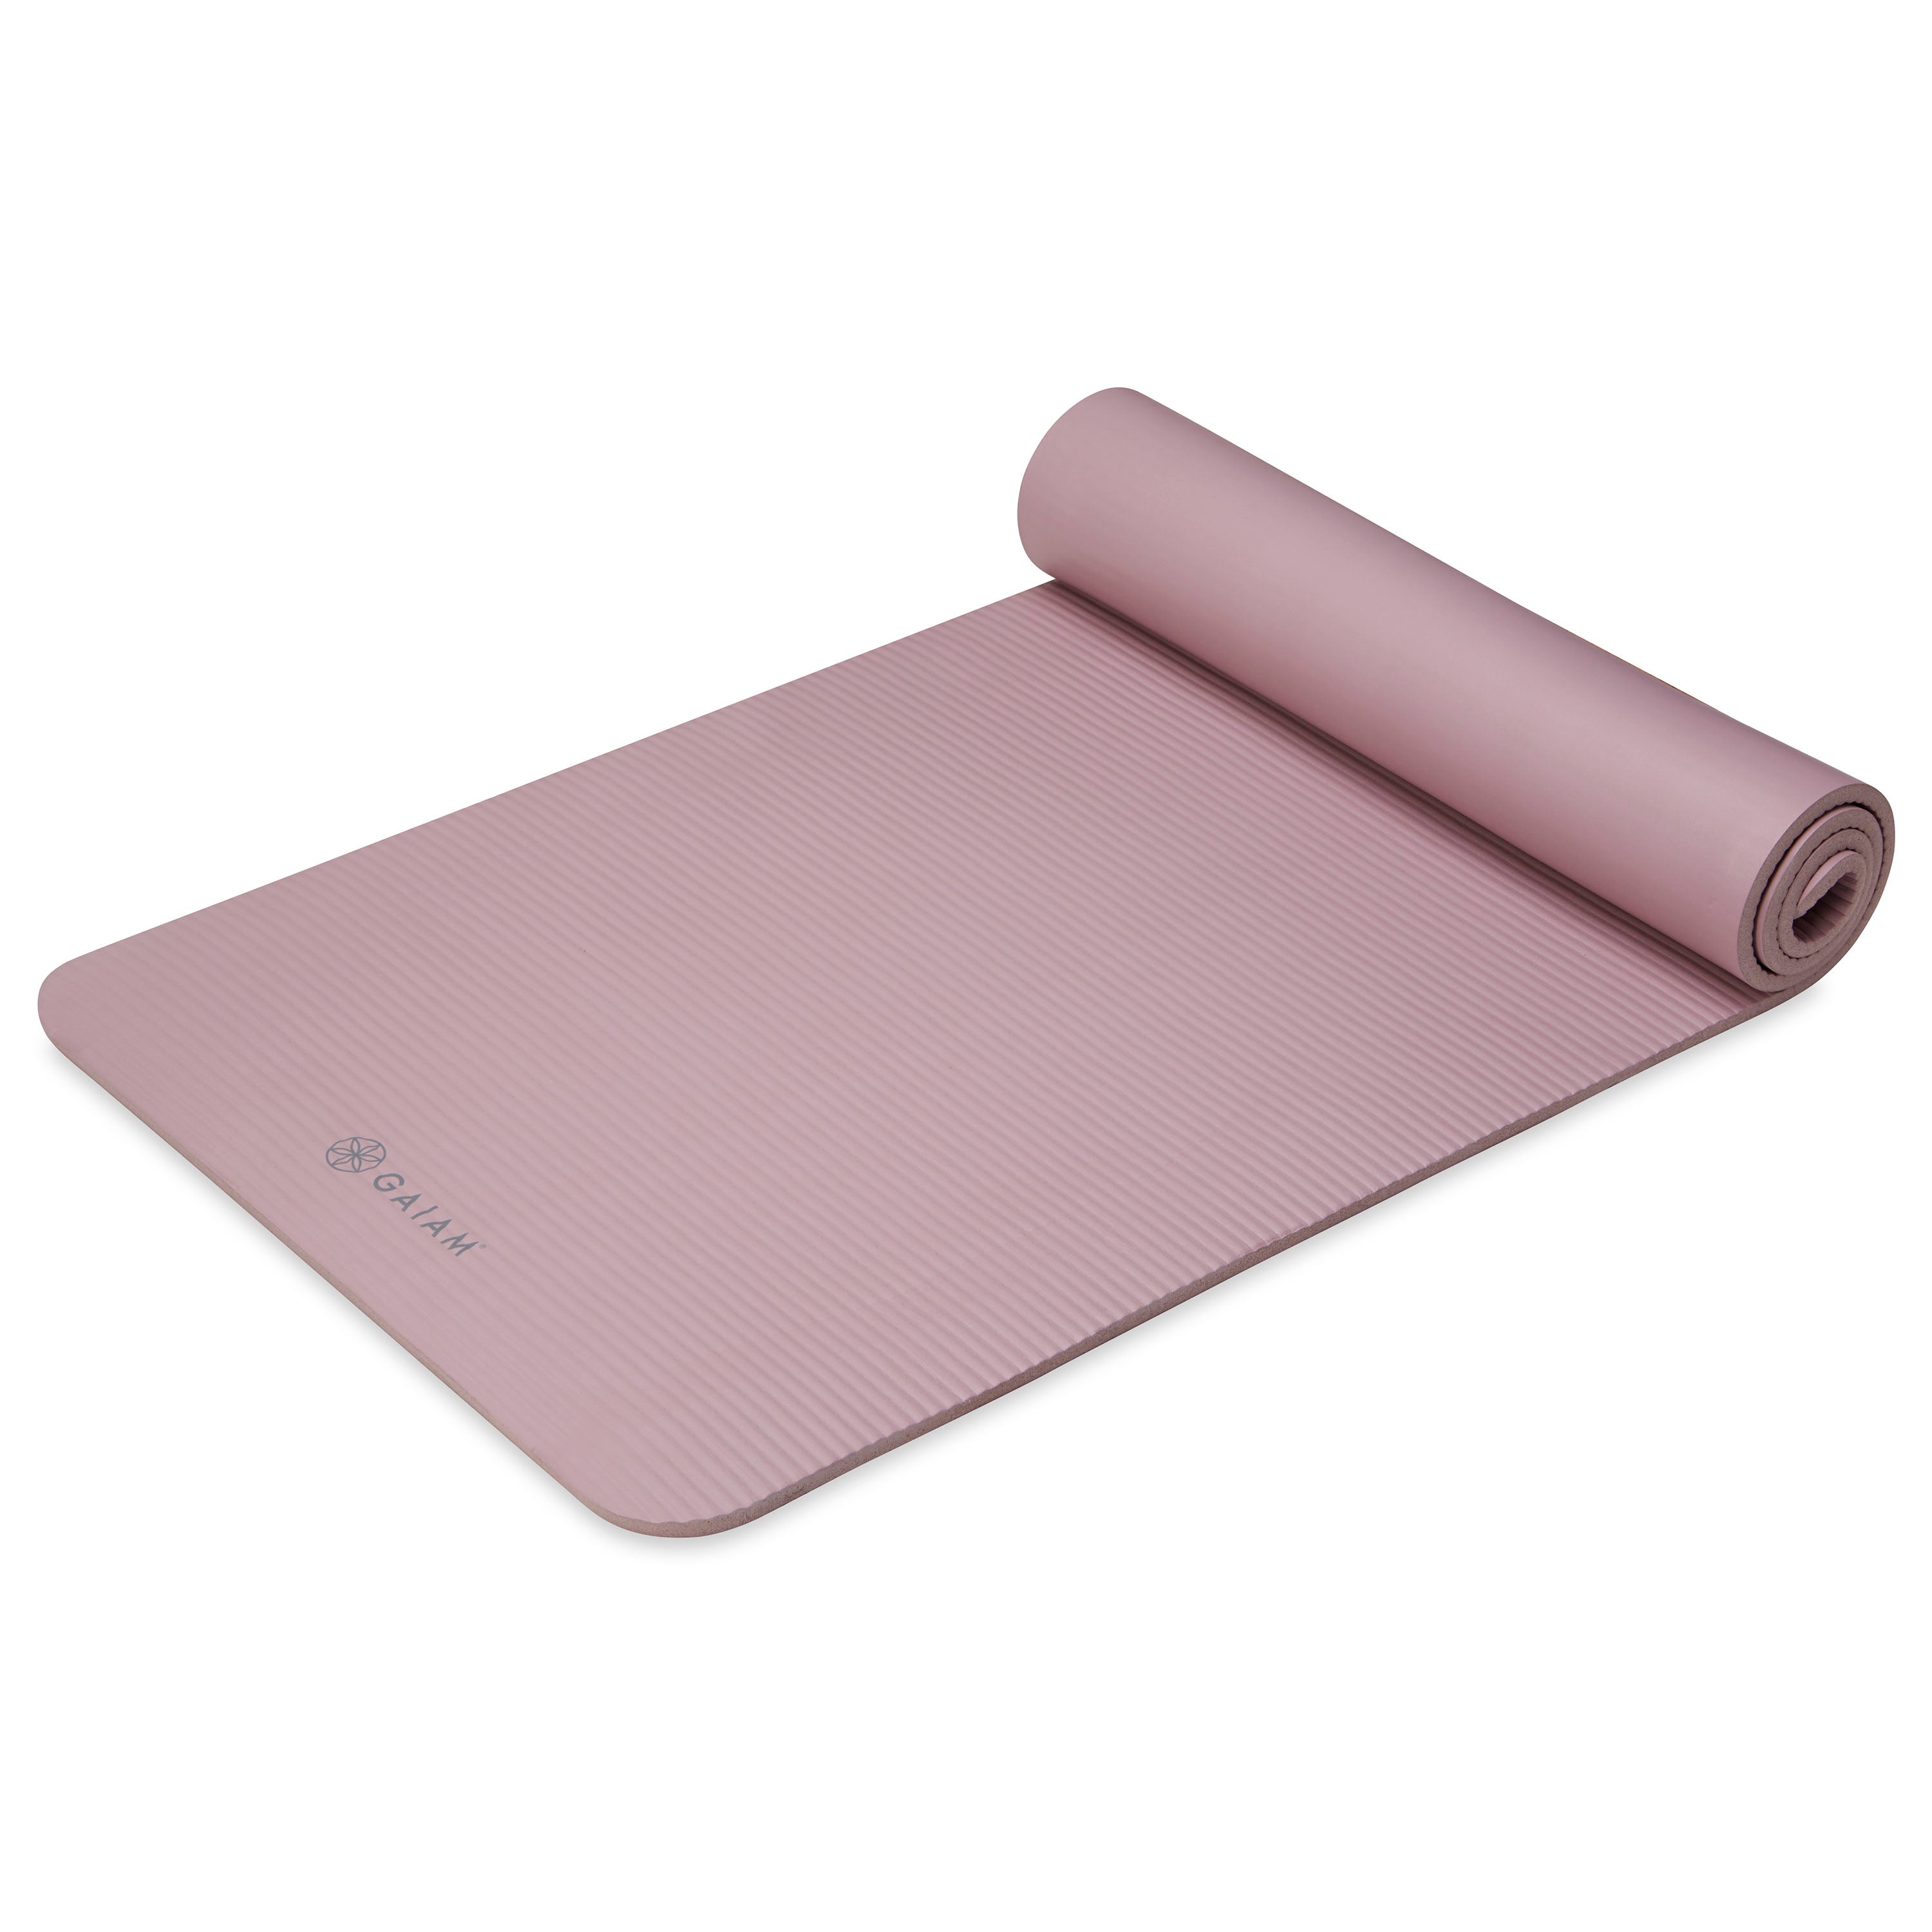 Gaiam Fitness Mat (10mm) Purple rolled